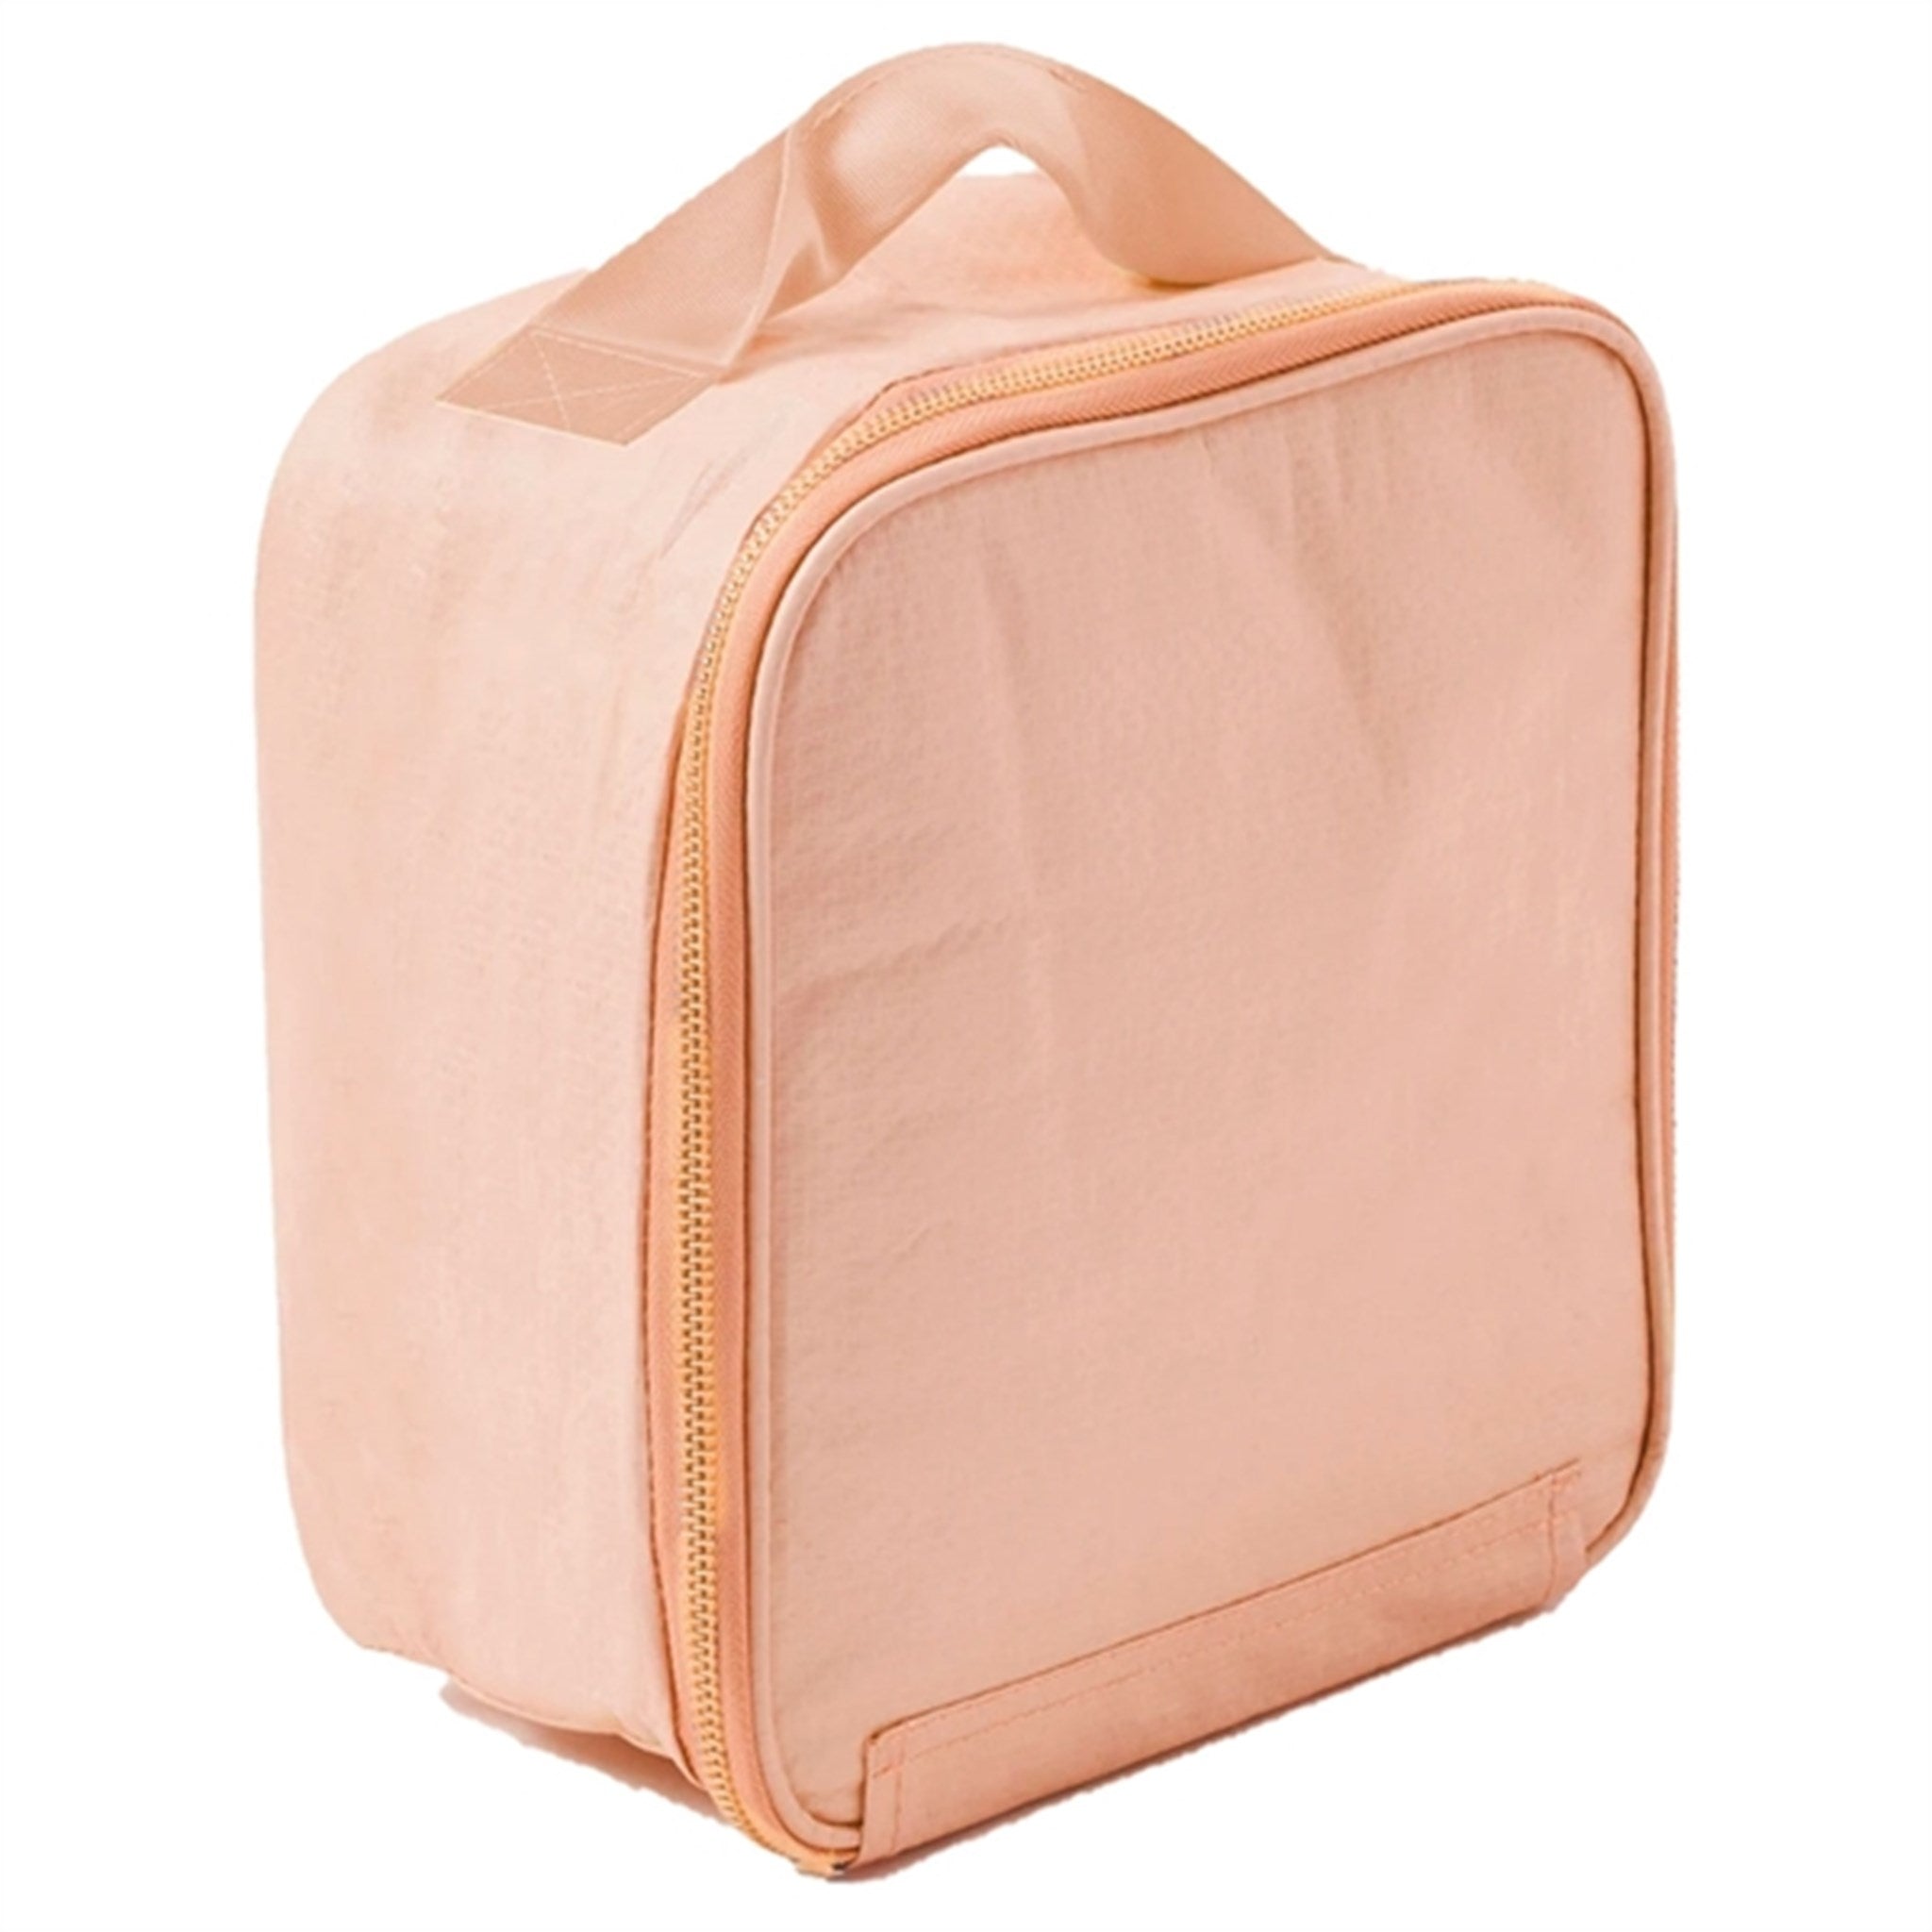 SunnyLife Lunch Bag Neoprene Soft Coral 3